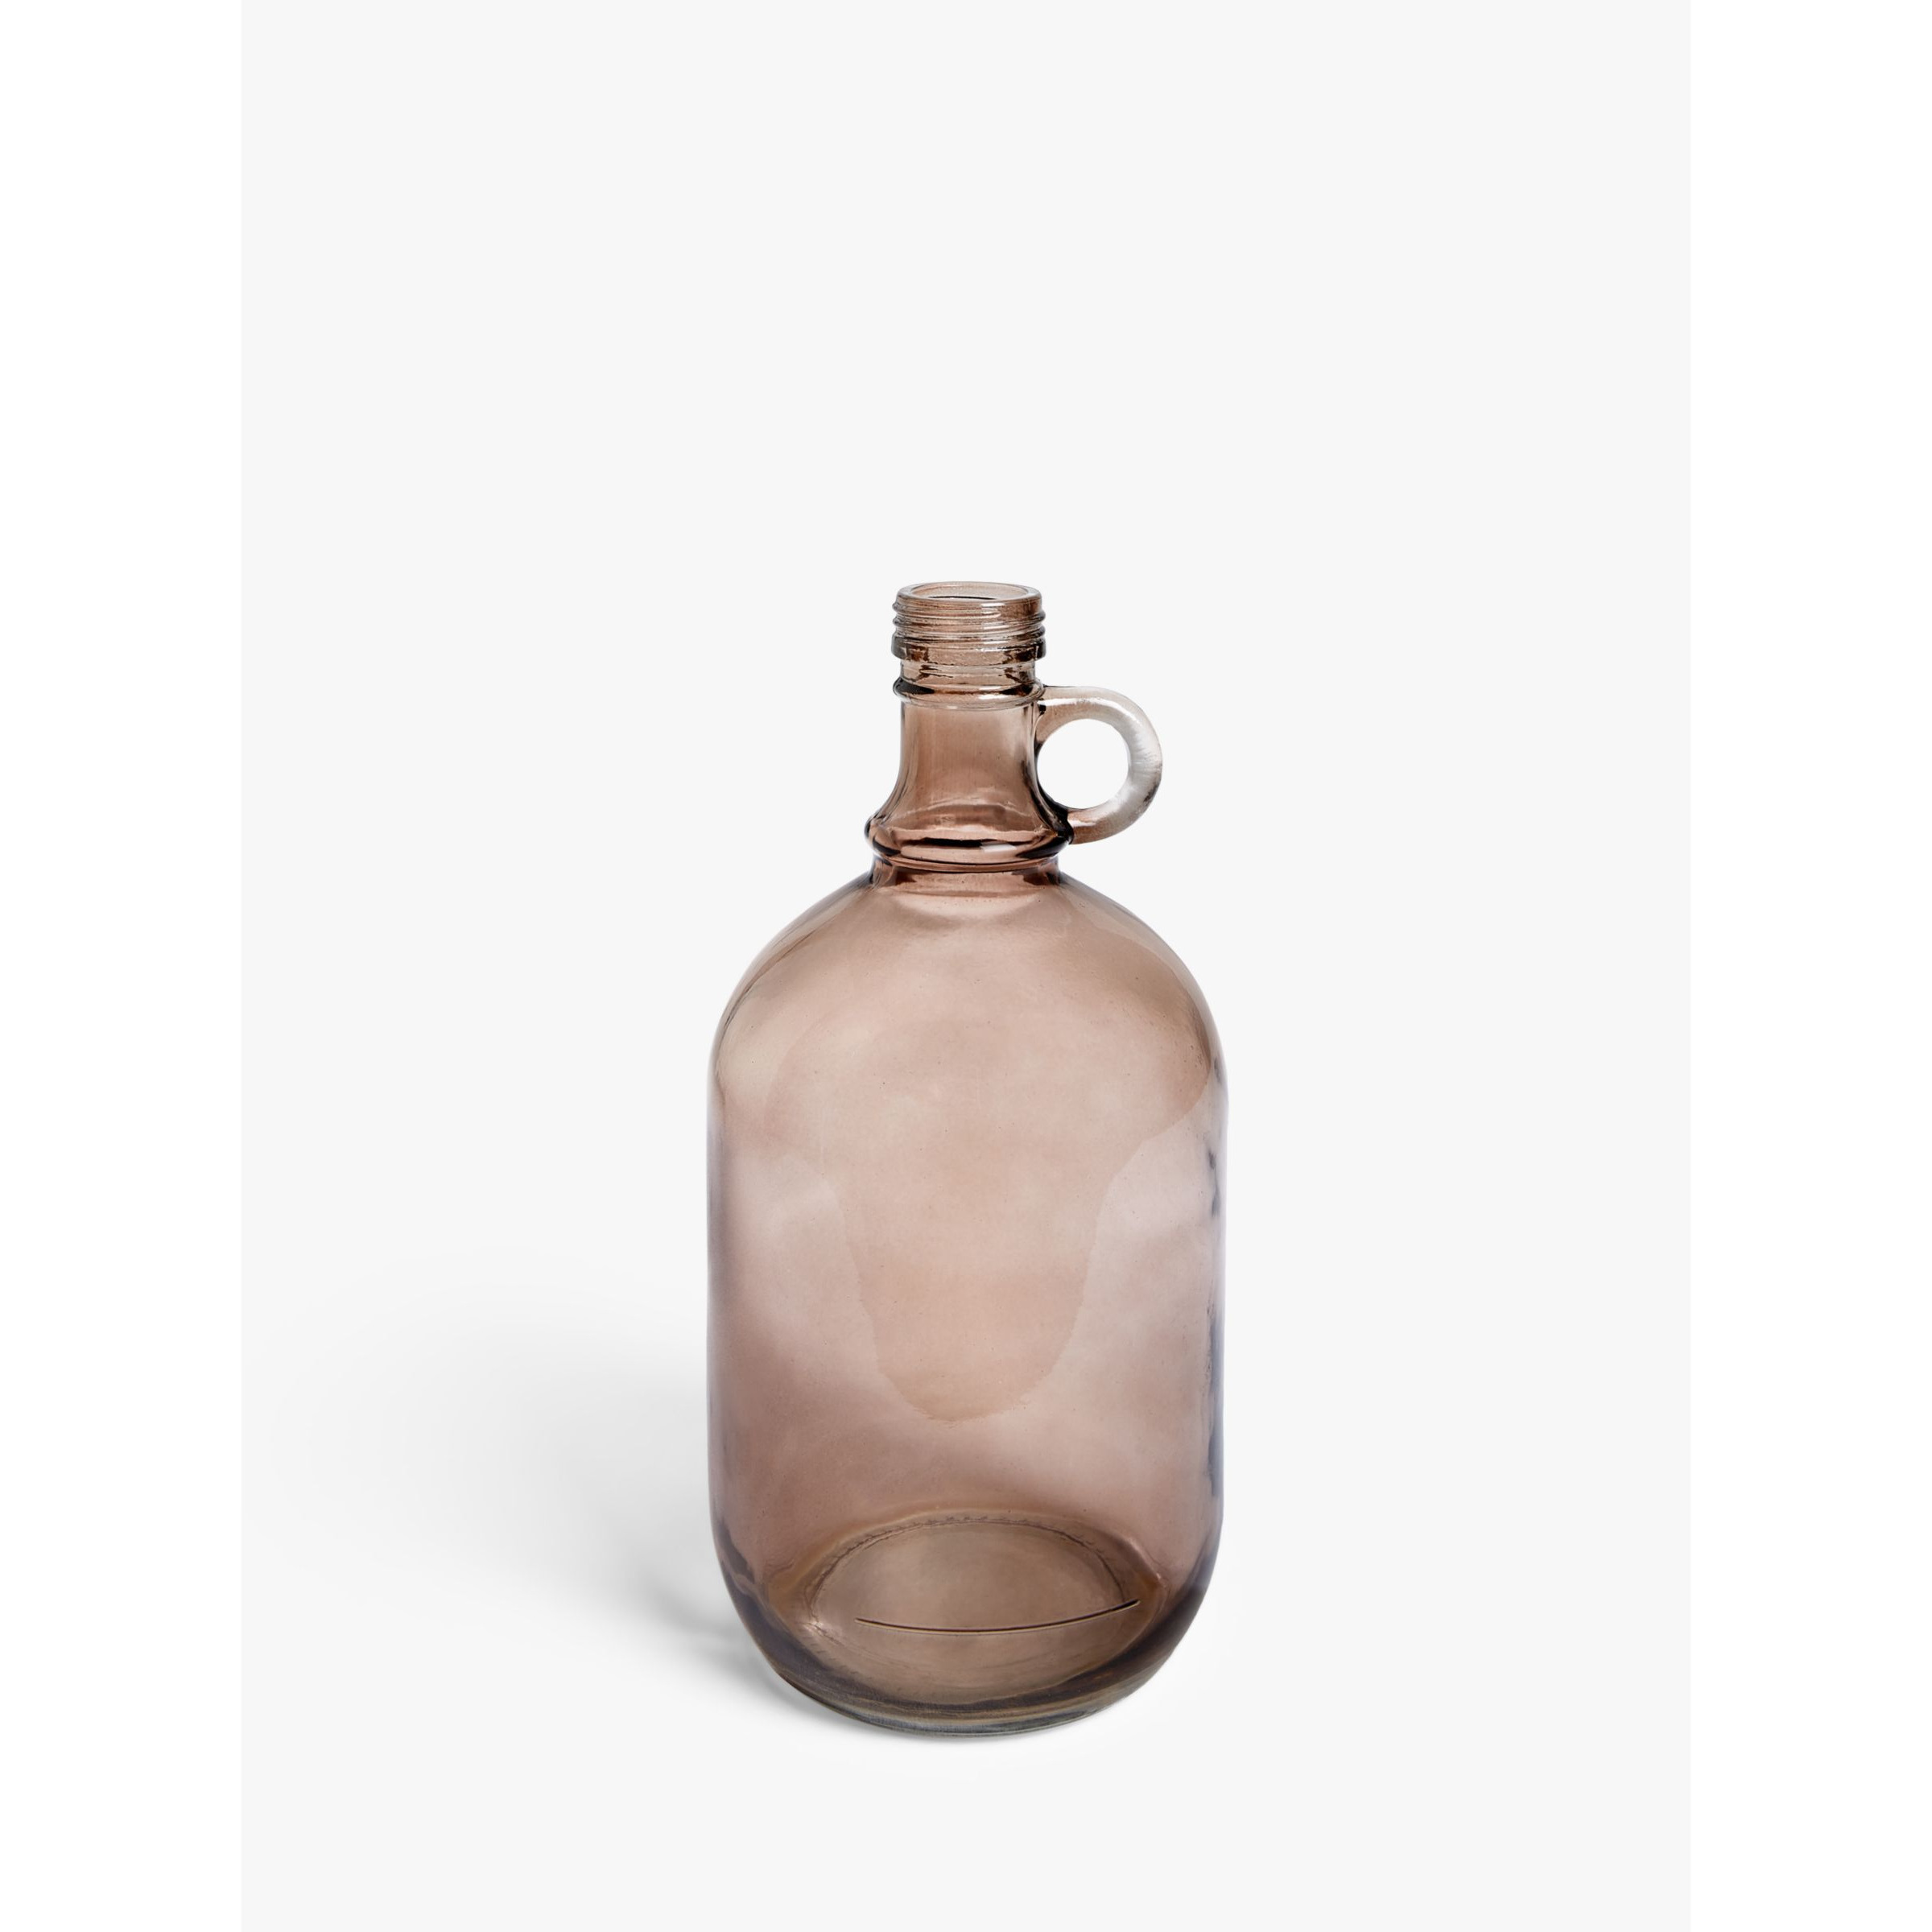 John Lewis Bottle Vase, H26cm, Brown - image 1